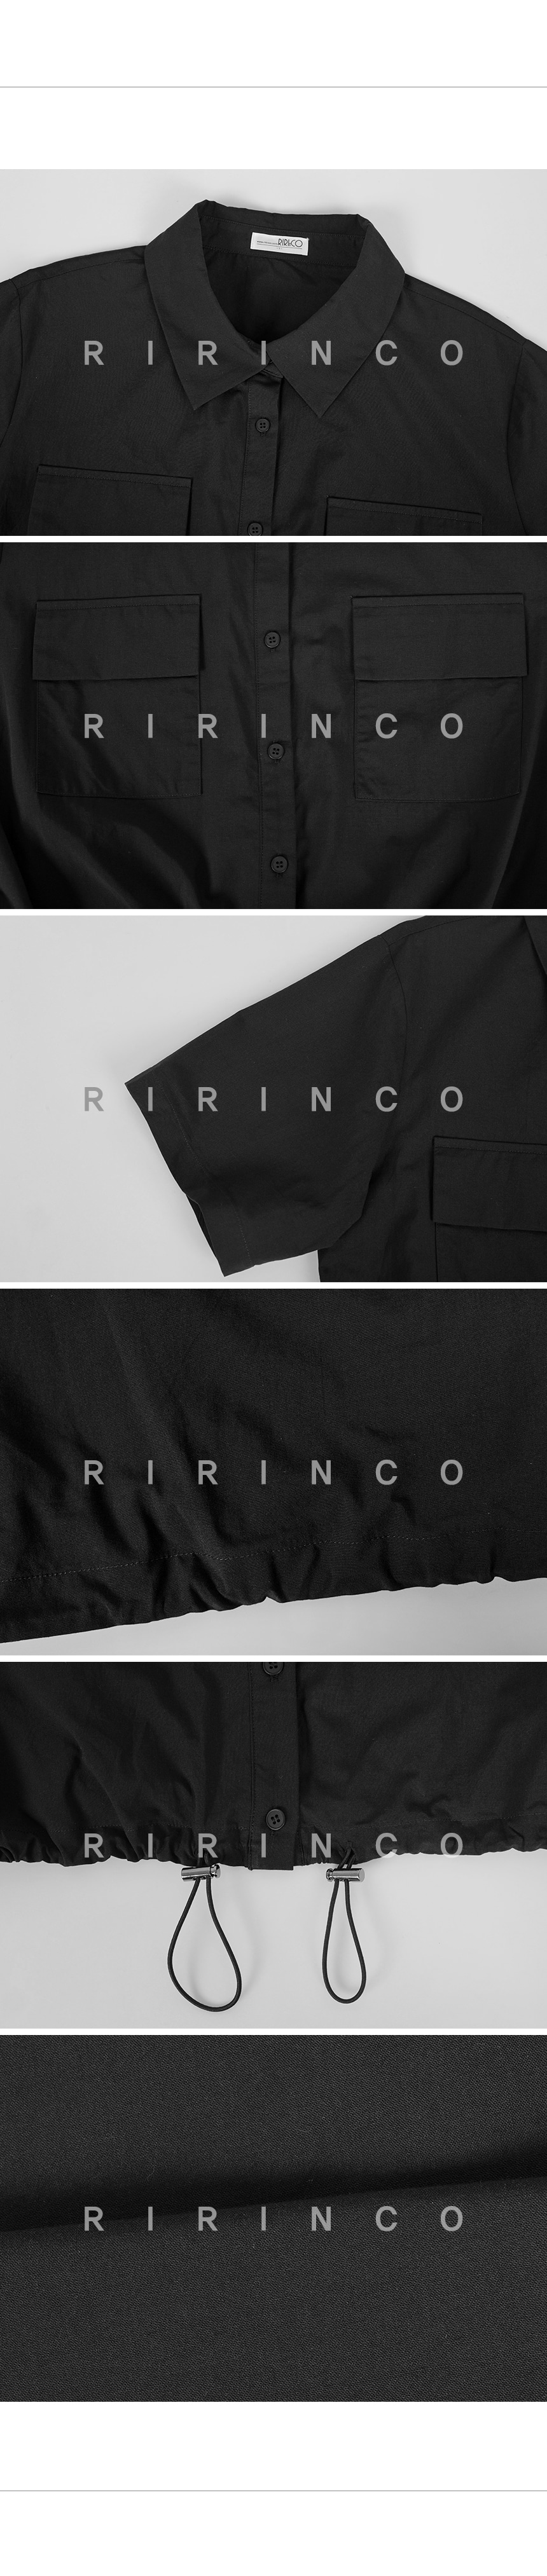 RIRINCO モダール裾ストリングクロップドシャツジャケット